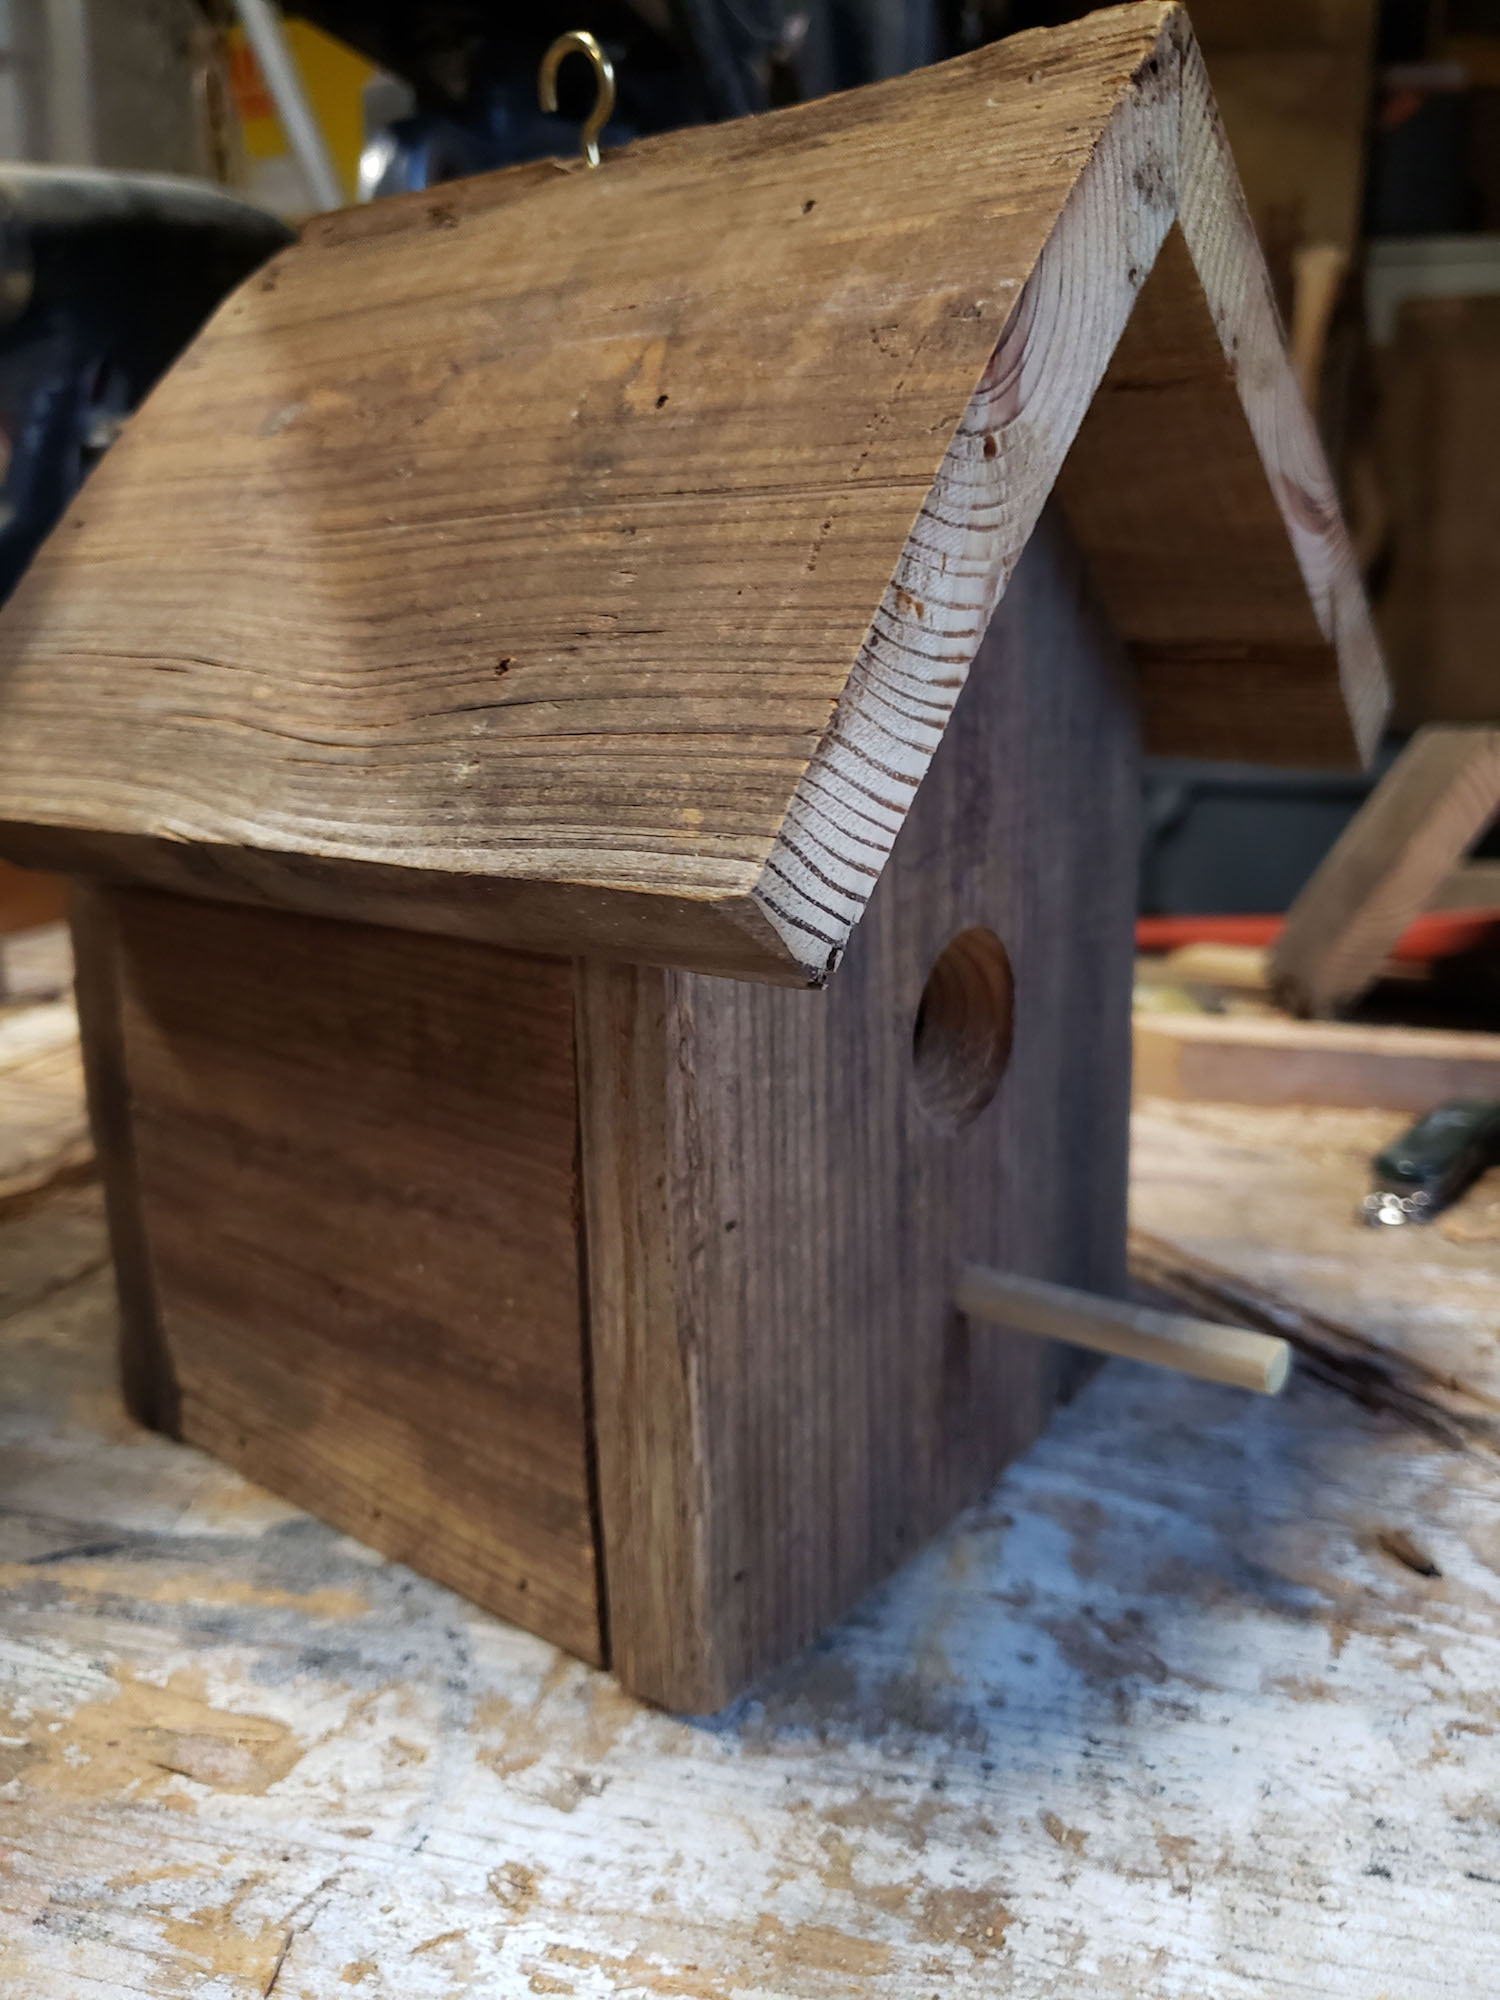 The DIY barnwood bird houses we created for kids on Etsy